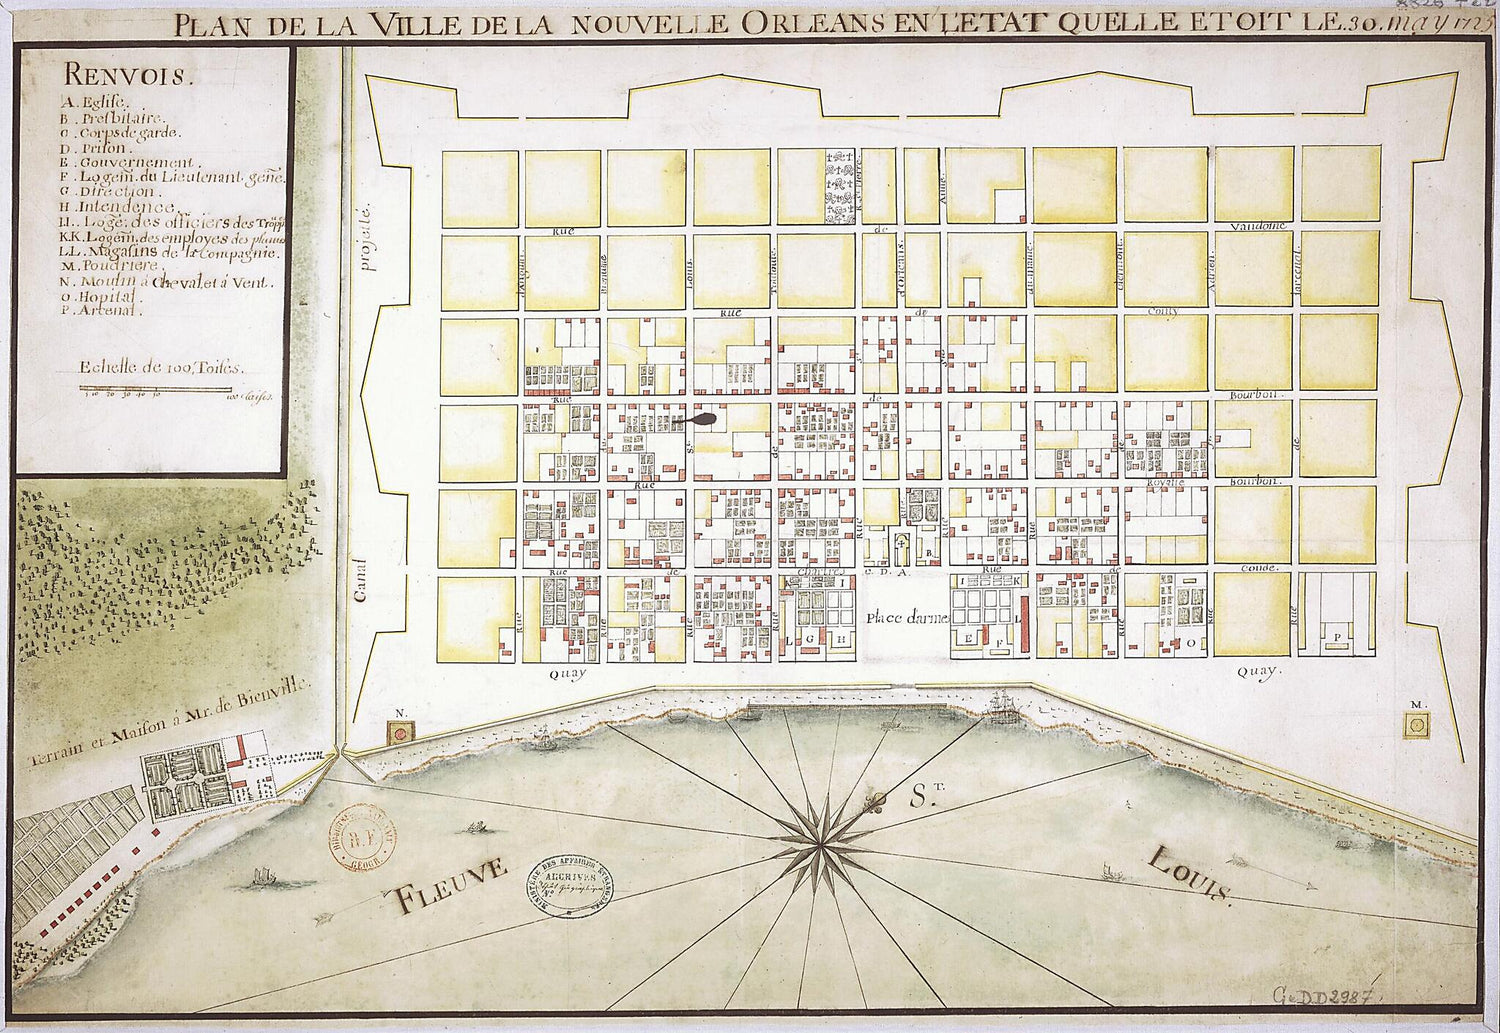 This old map of Map of the City of New Orleans As It Was On May 30, from 1725. (Plan De La Ville De La Nouvelle Orléans En L&